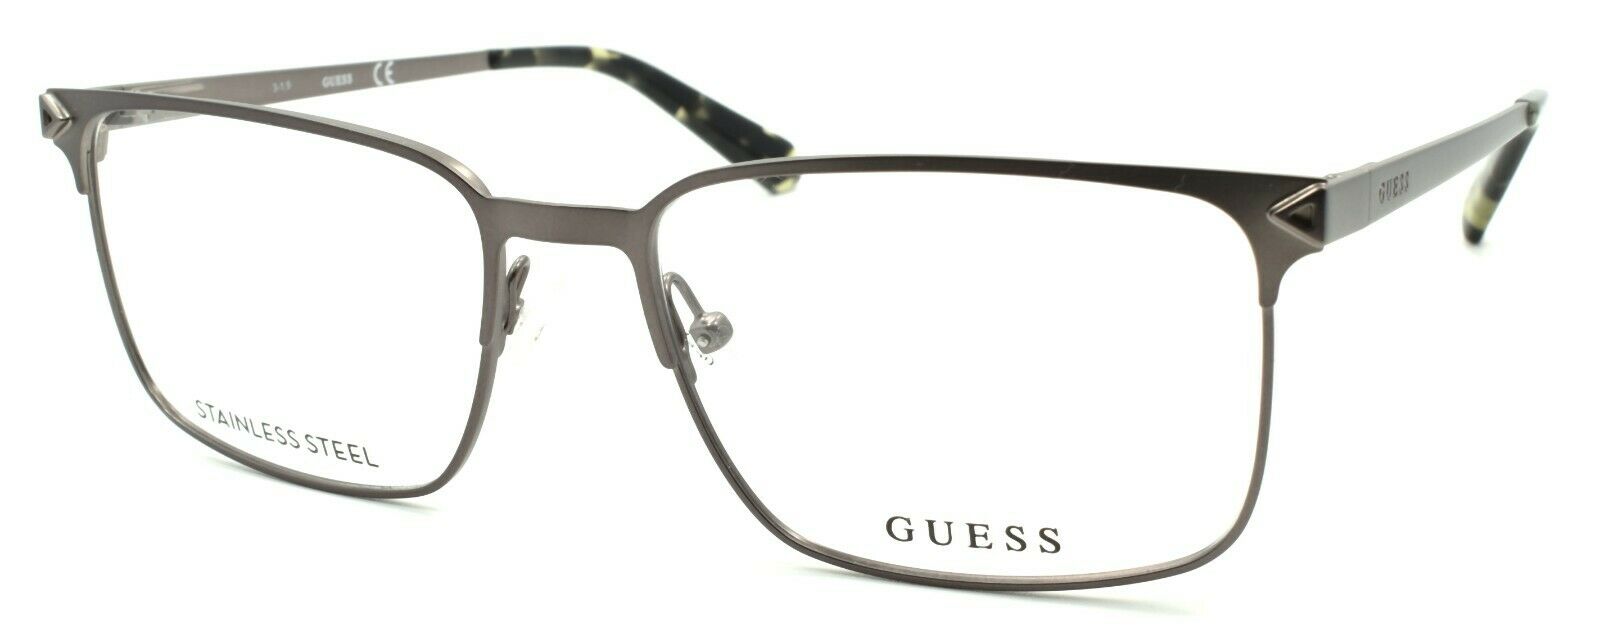 1-GUESS GU1965 009 Men's Eyeglasses Frames 55-17-145 Matte Gunmetal-889214034052-IKSpecs